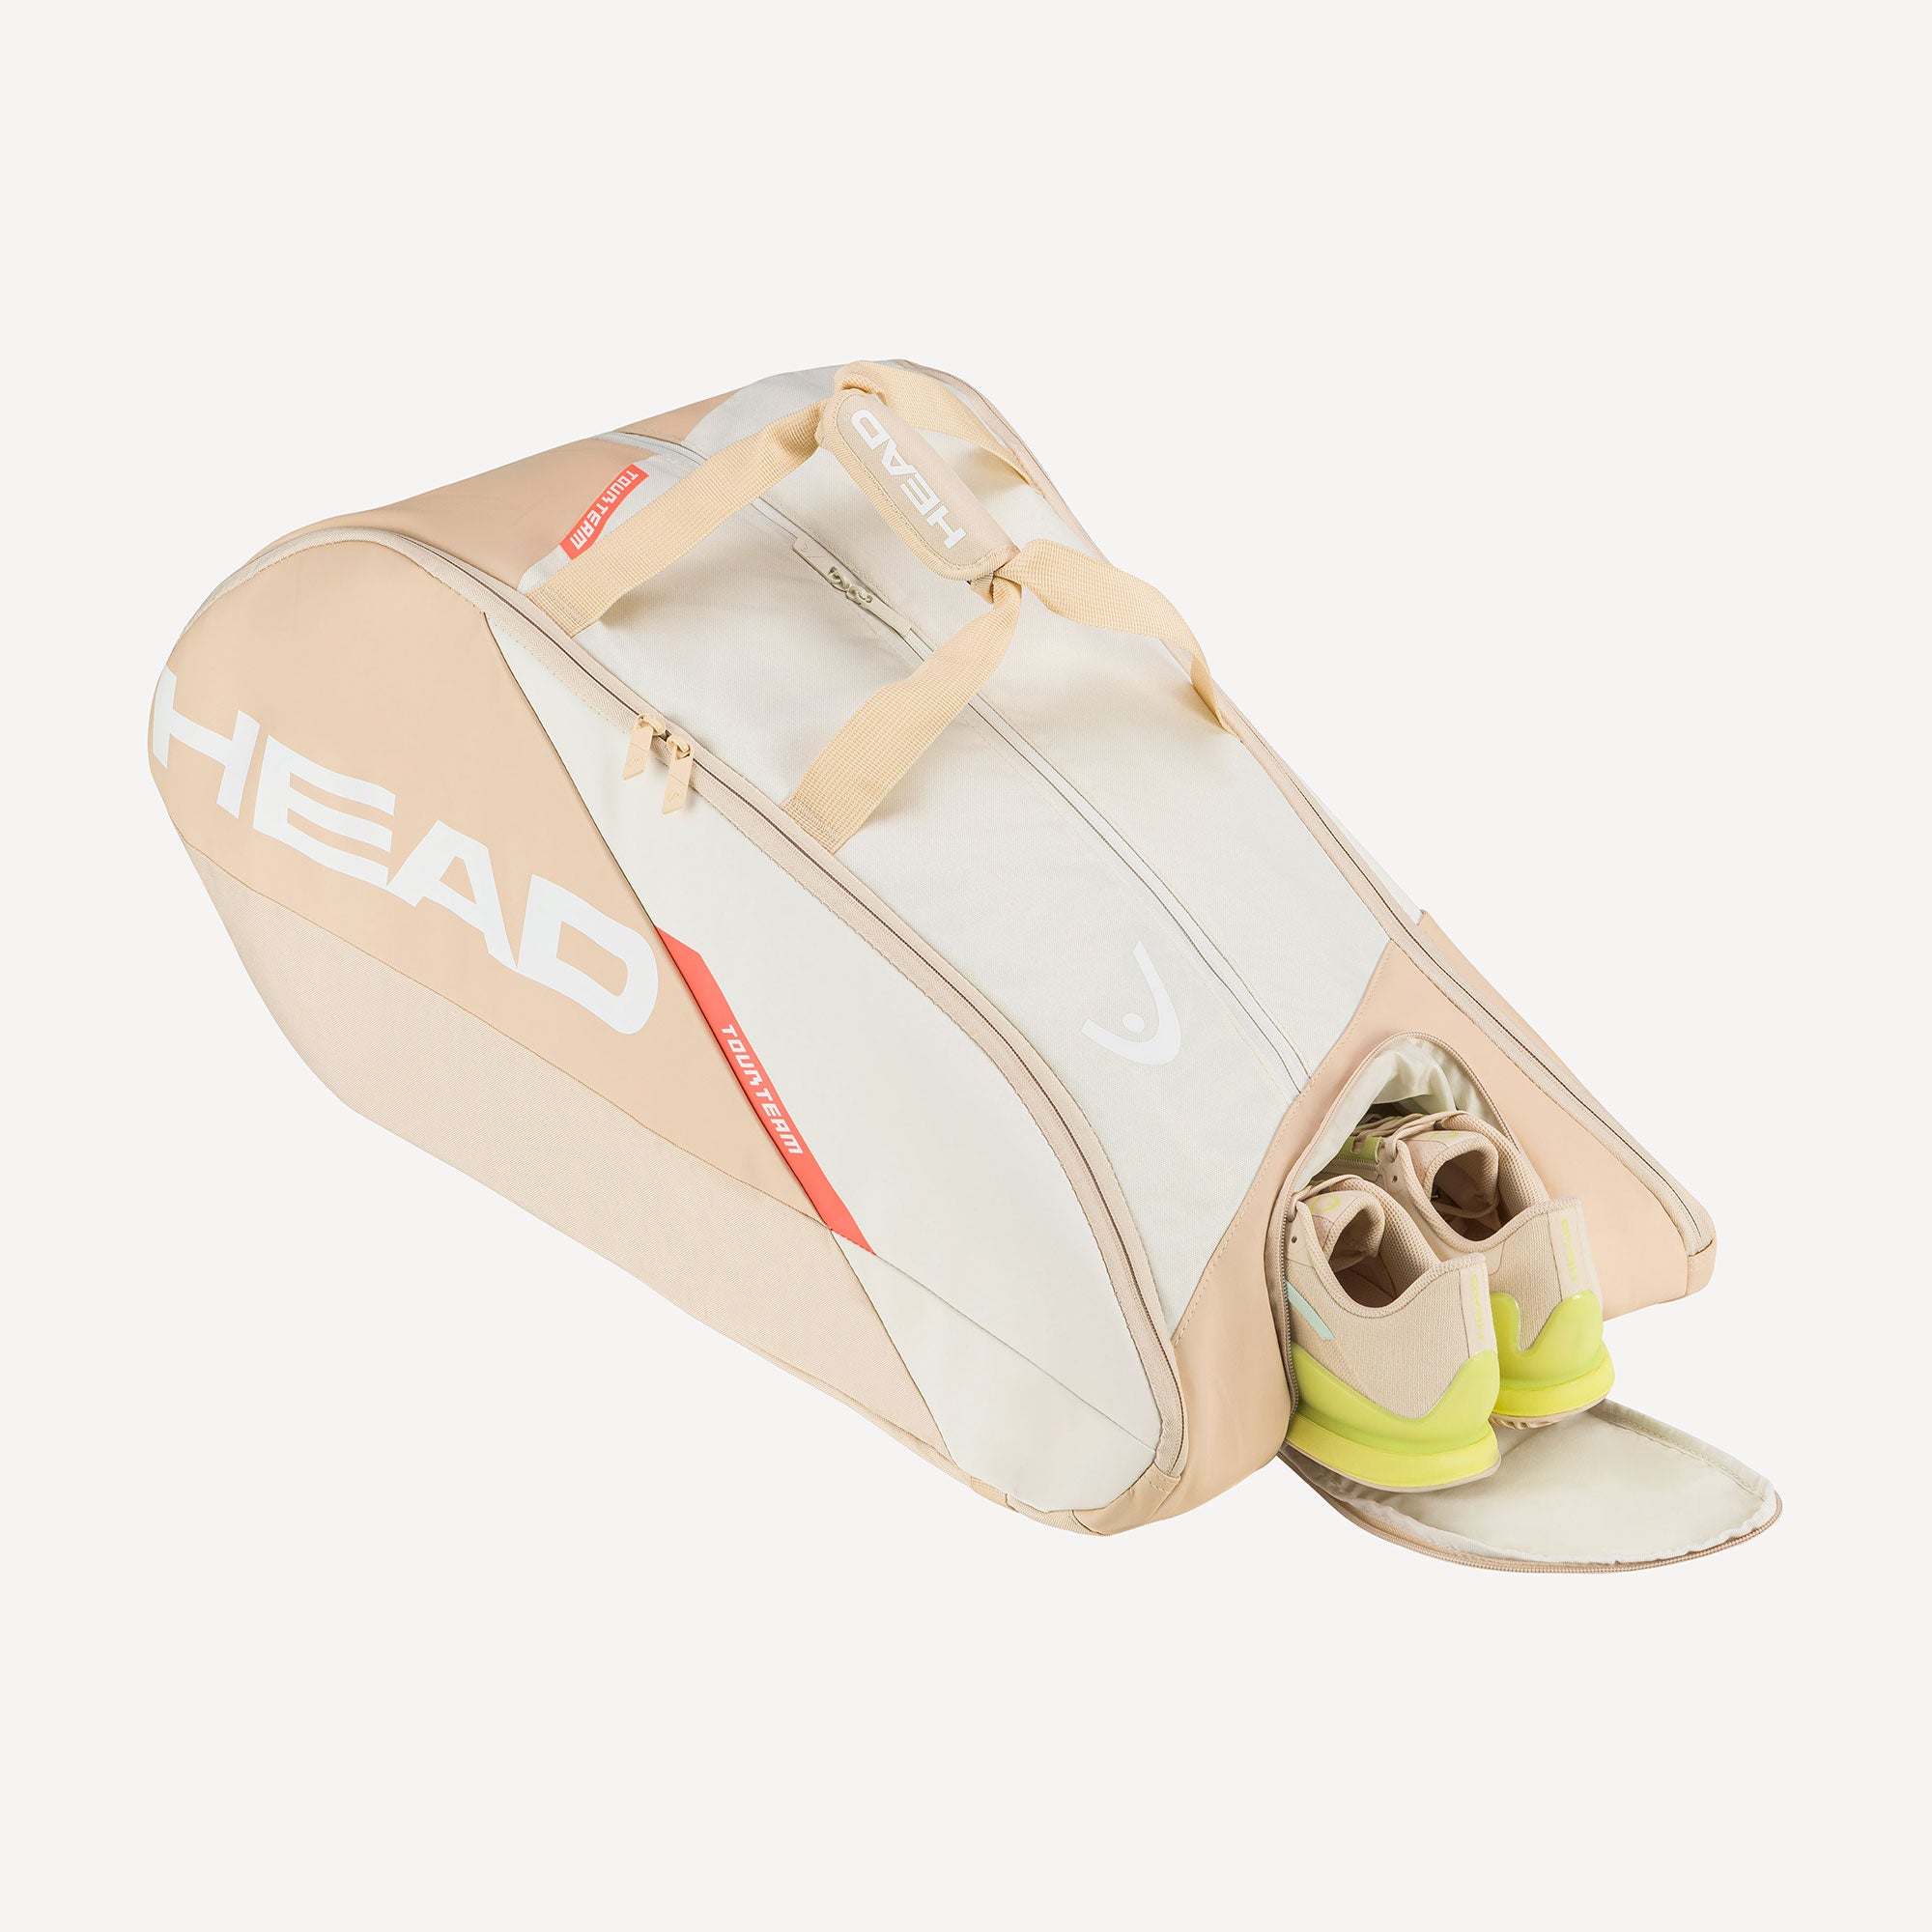 HEAD Tour Tennis Racket Bag XL White (2)